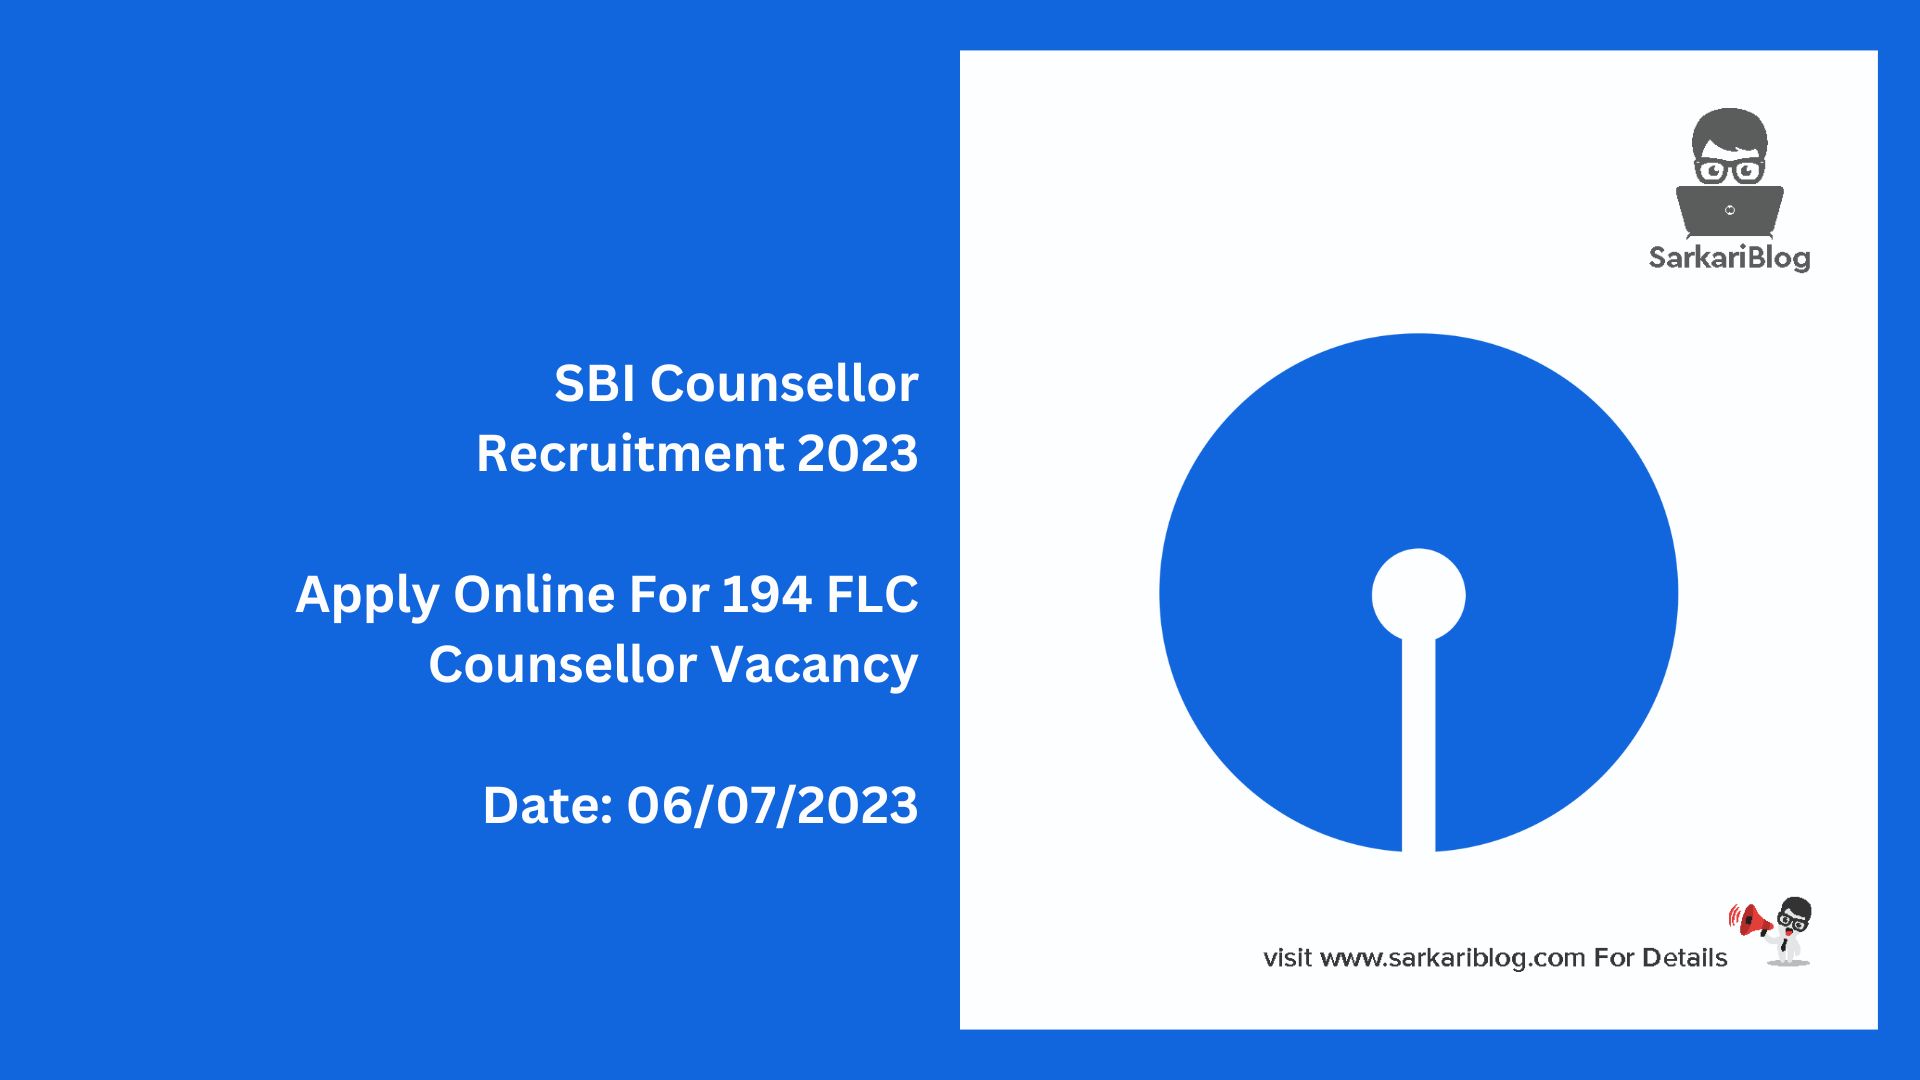 SBI Counsellor Recruitment 2023